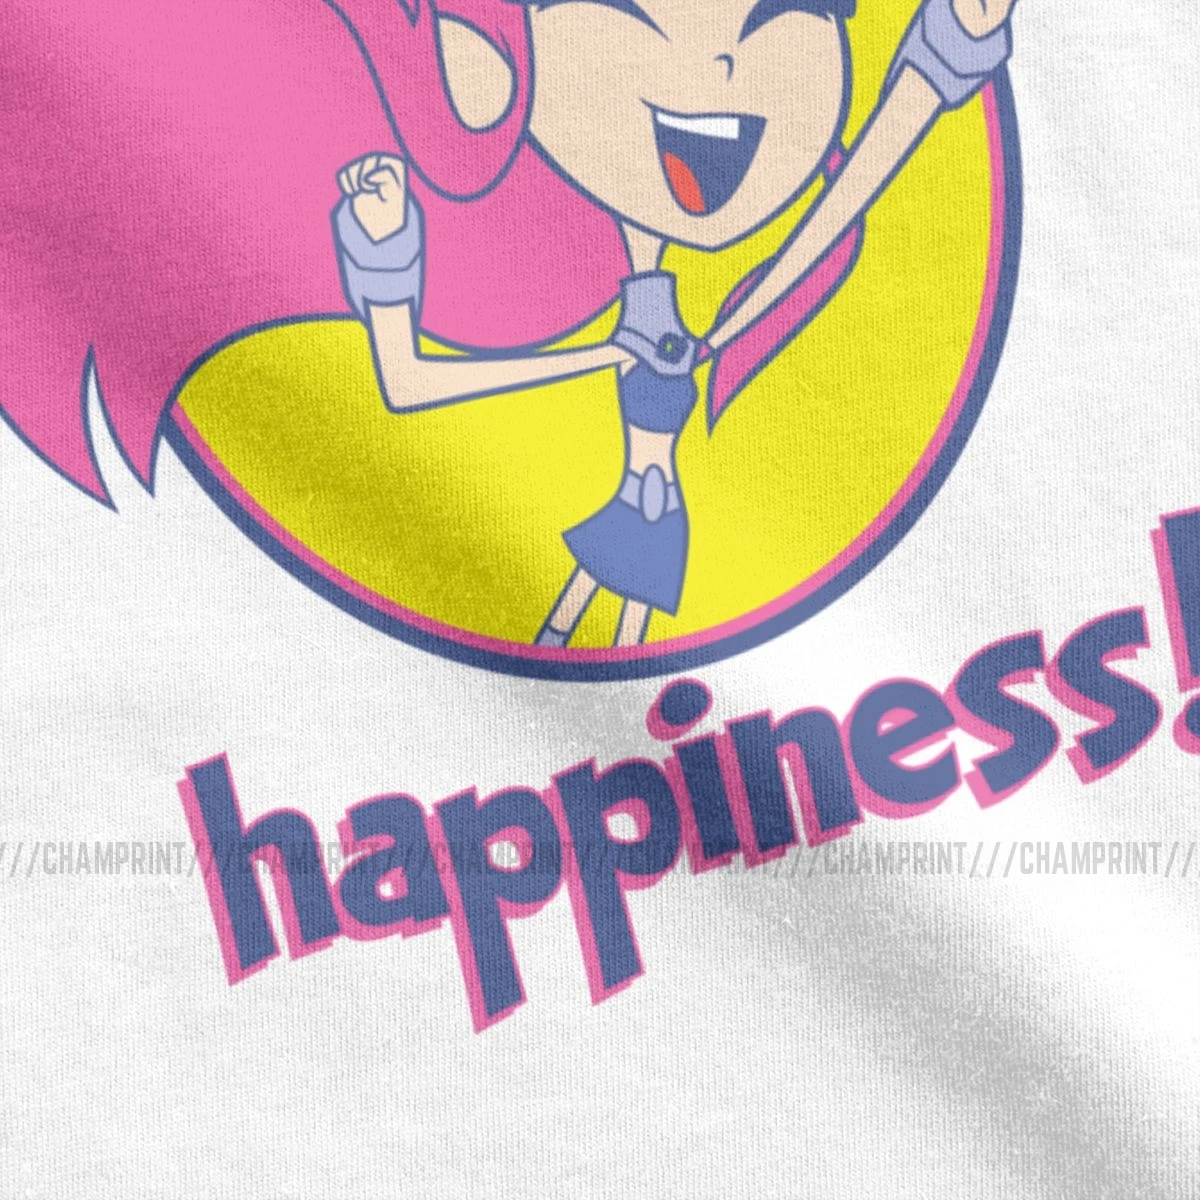 Teen Titans Go Starfire I Have The футболка с надписью Happiness женские футболки Kawaii футболки, топ, забавная Женская одежда с графикой